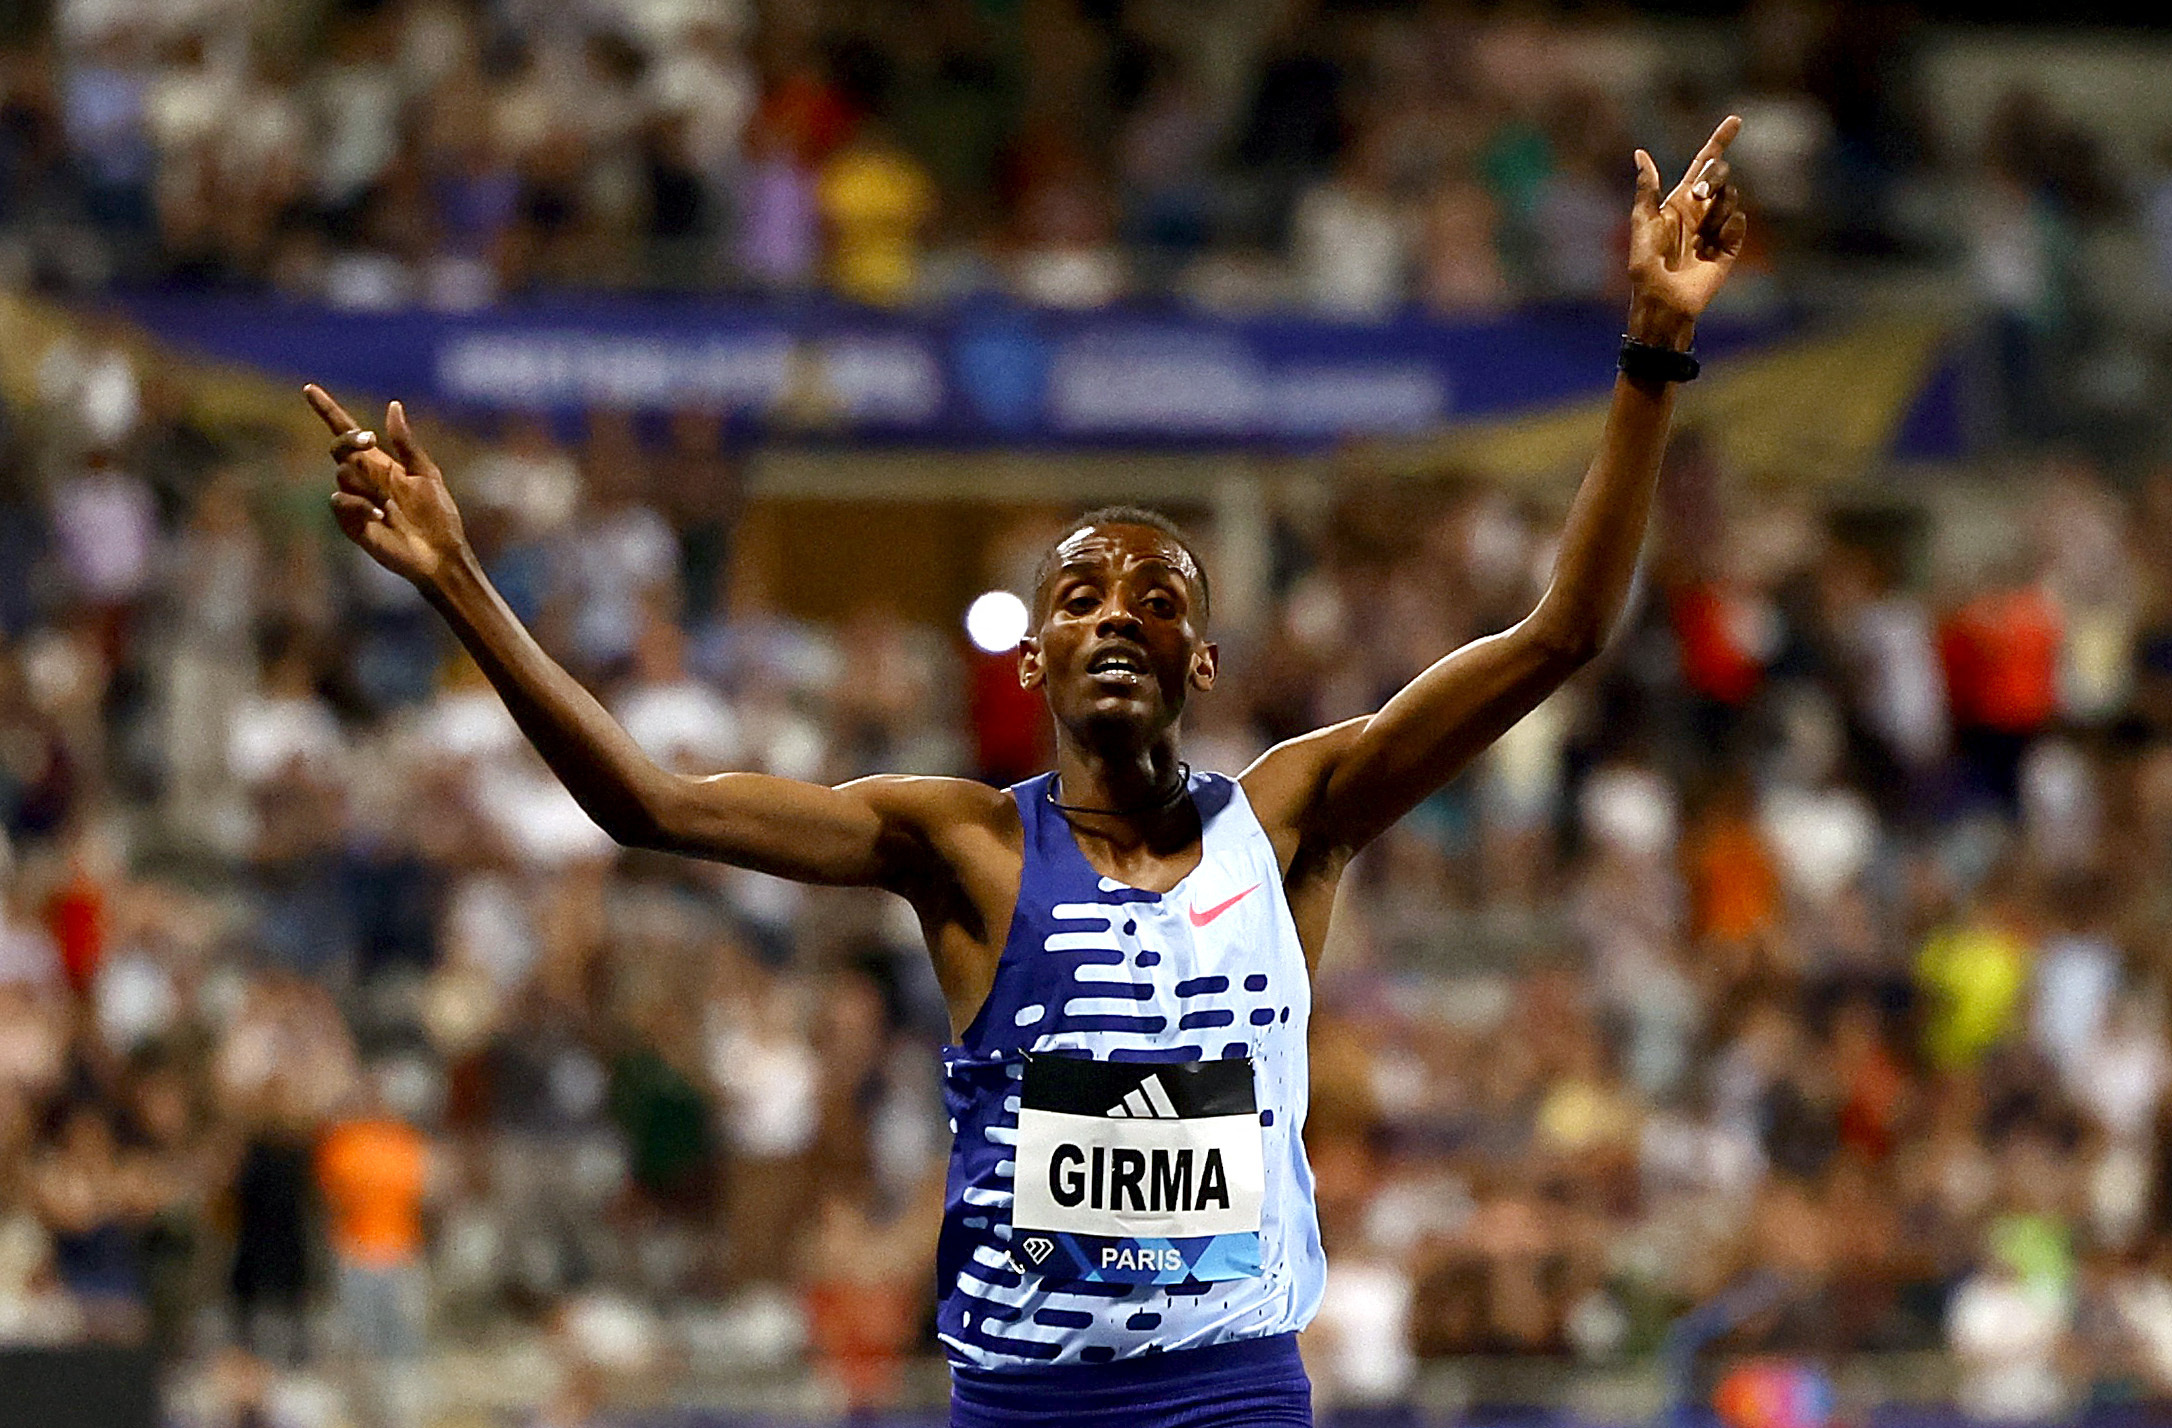 Ethiopia's Girma breaks men's 3,000m steeplechase world record in Paris